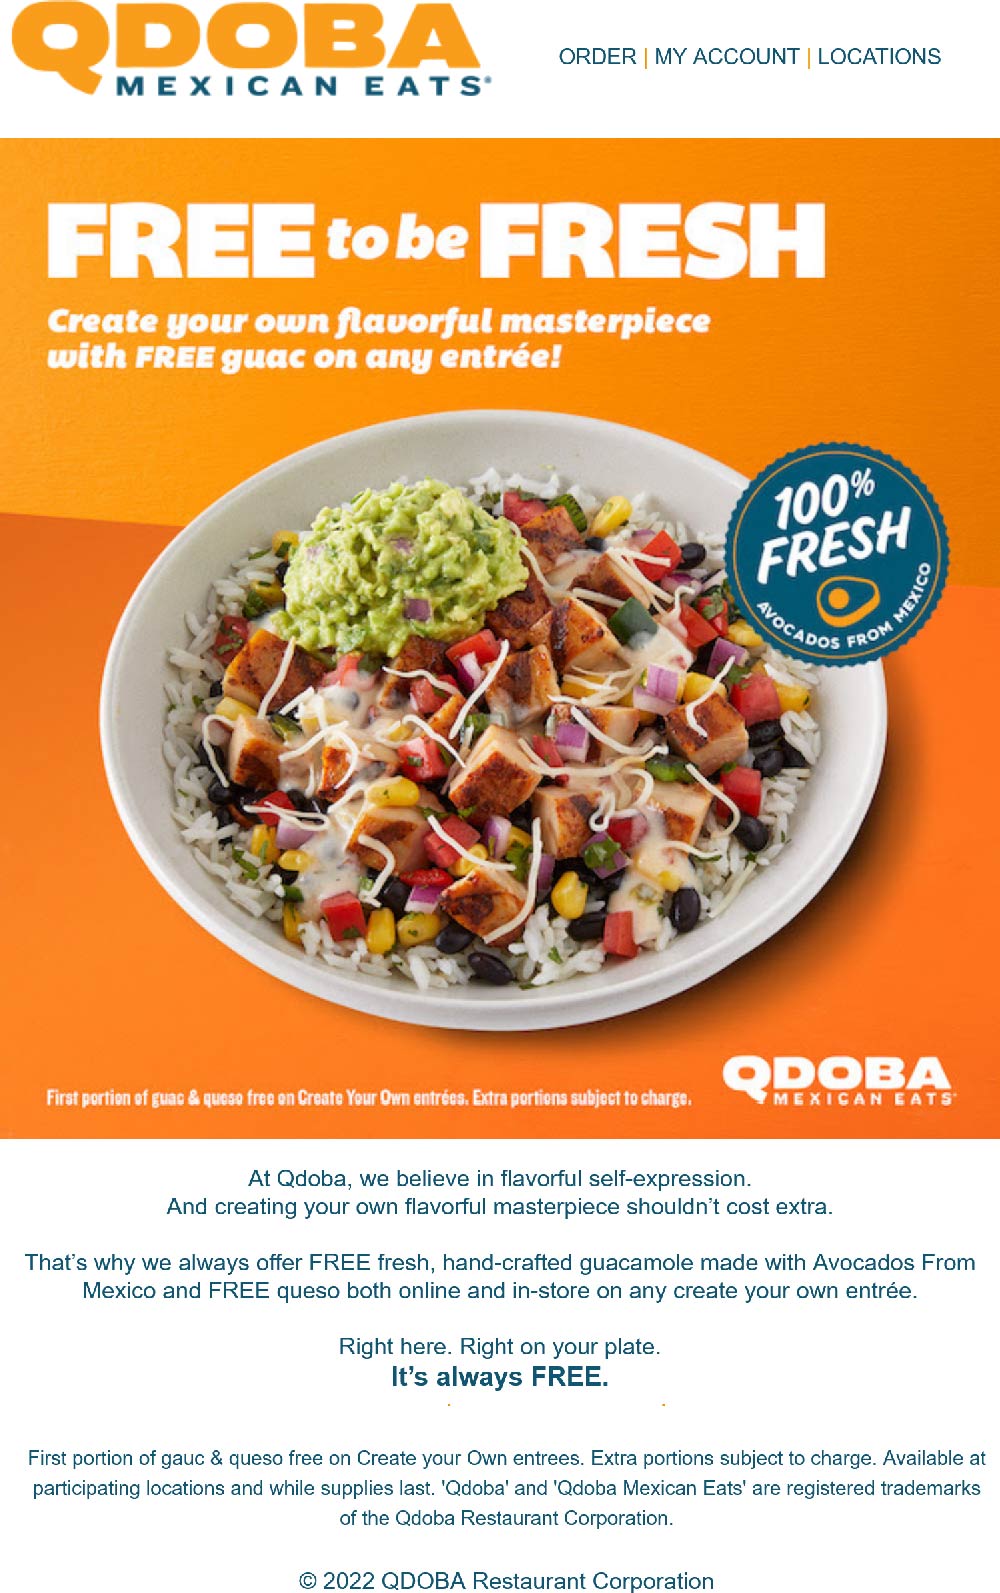 Qdoba restaurants Coupon  Guacamole & queso is free on your entree at Qdoba #qdoba 